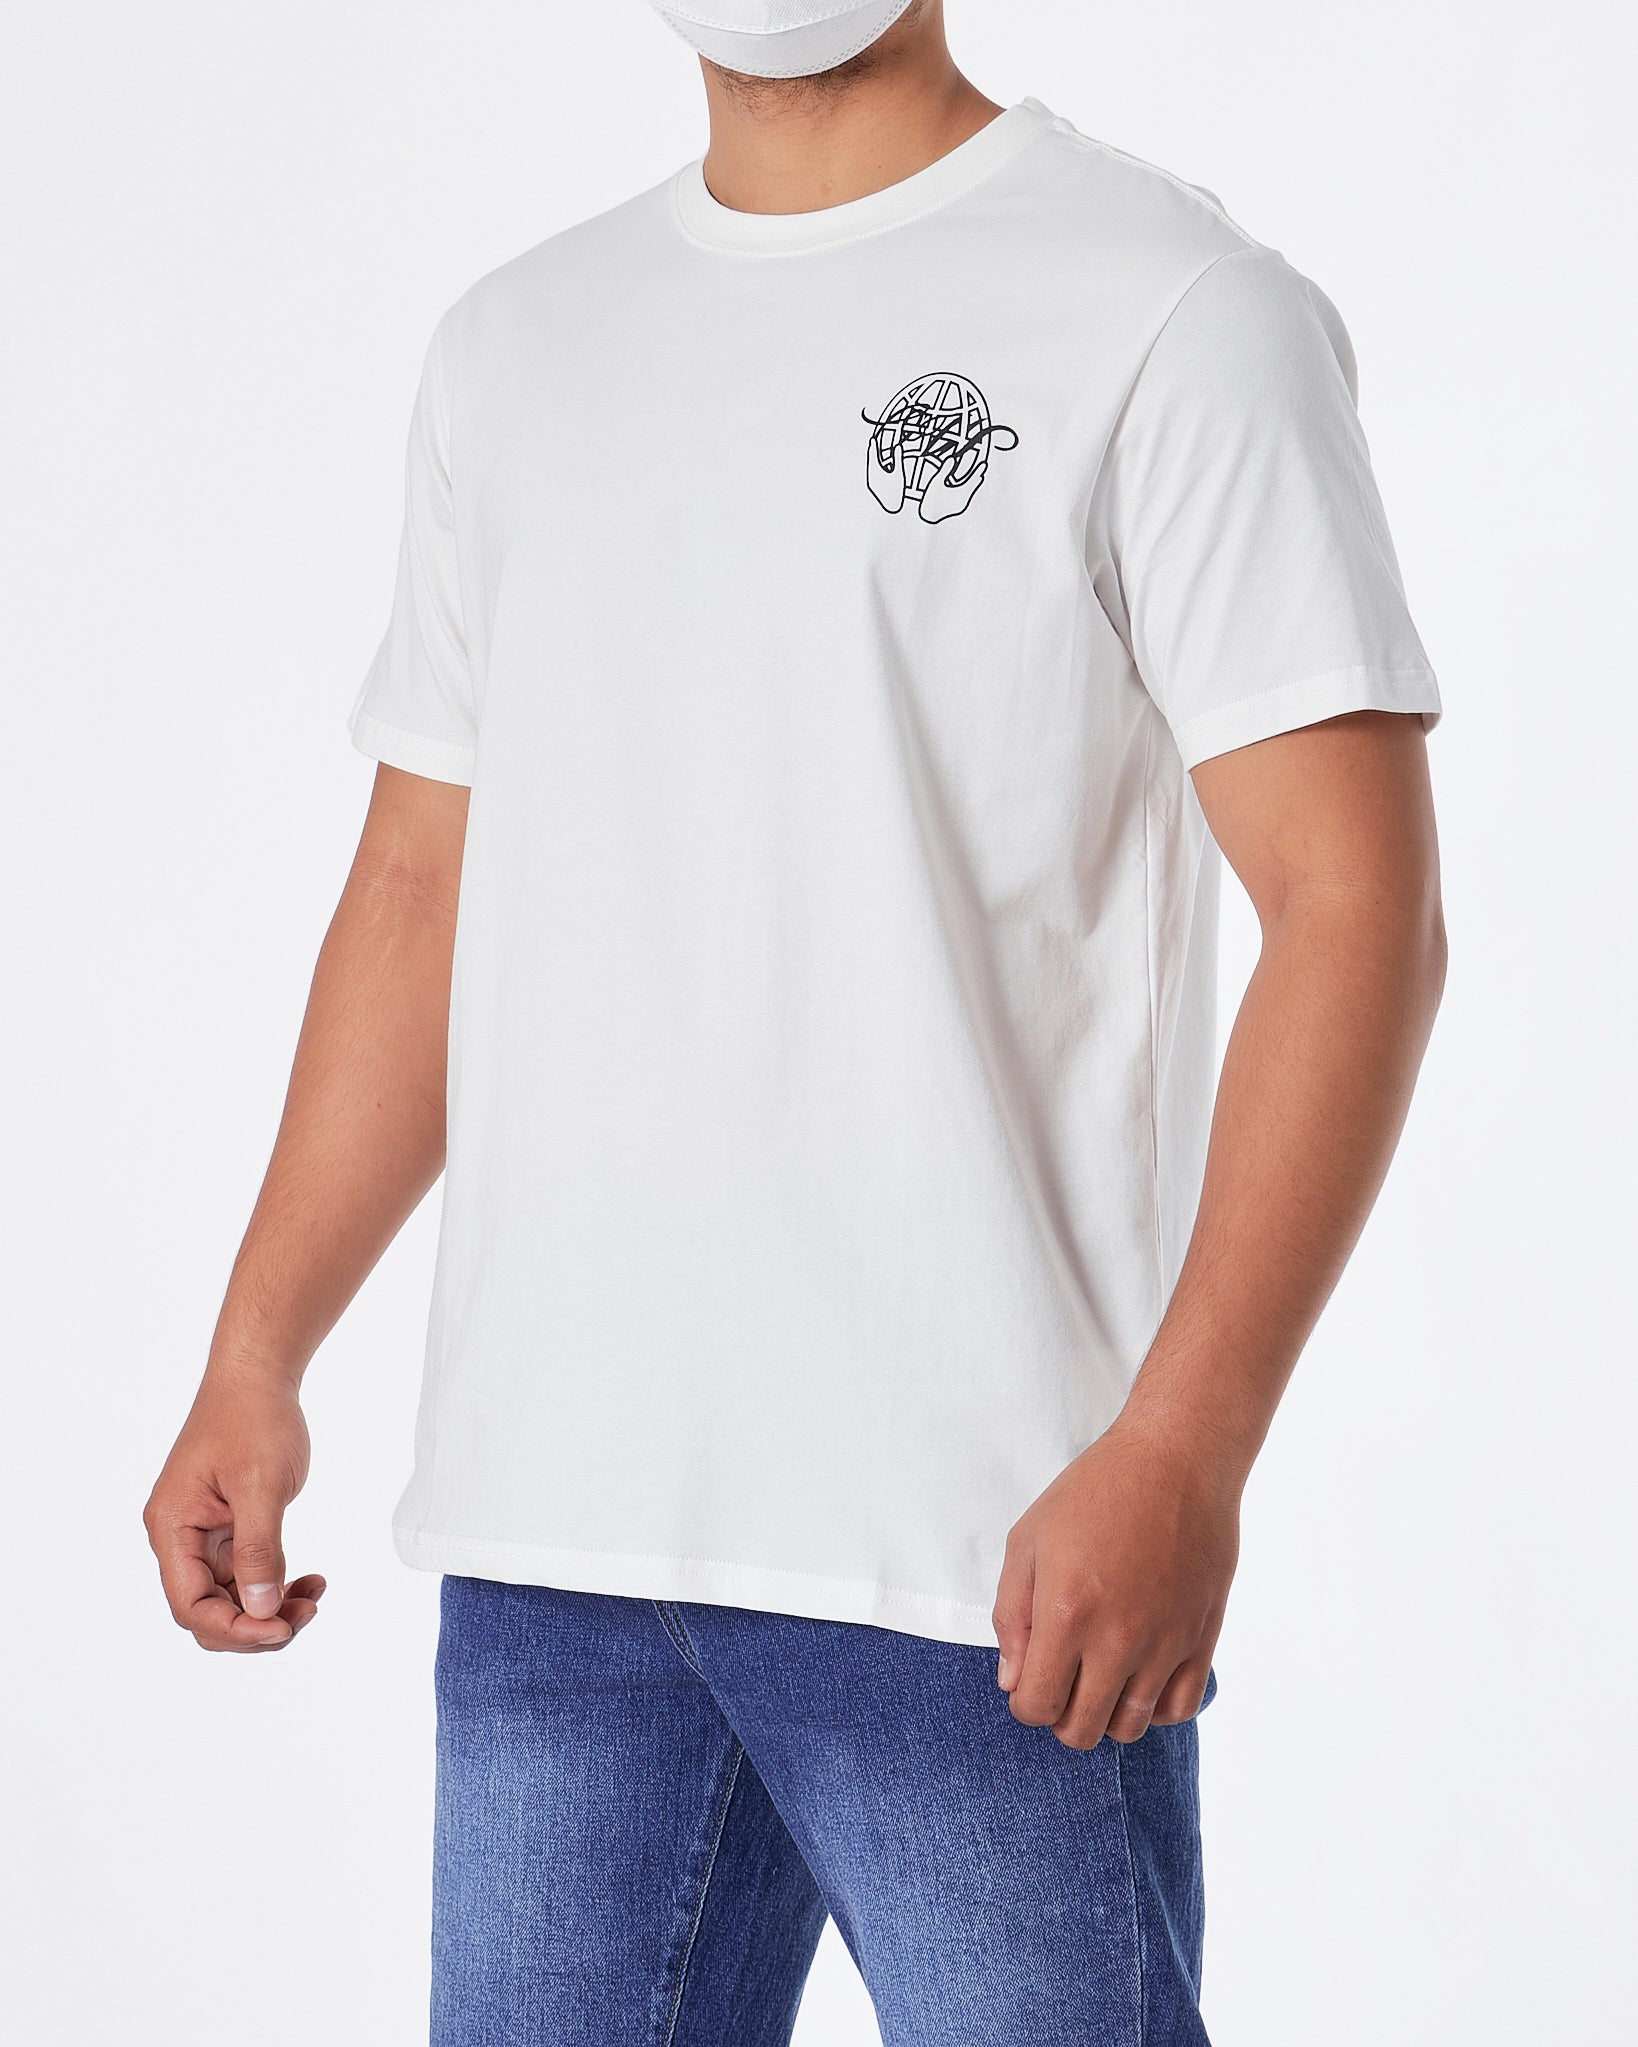 OW Cross Arrow Back Printed Men White T-Shirt 20.90